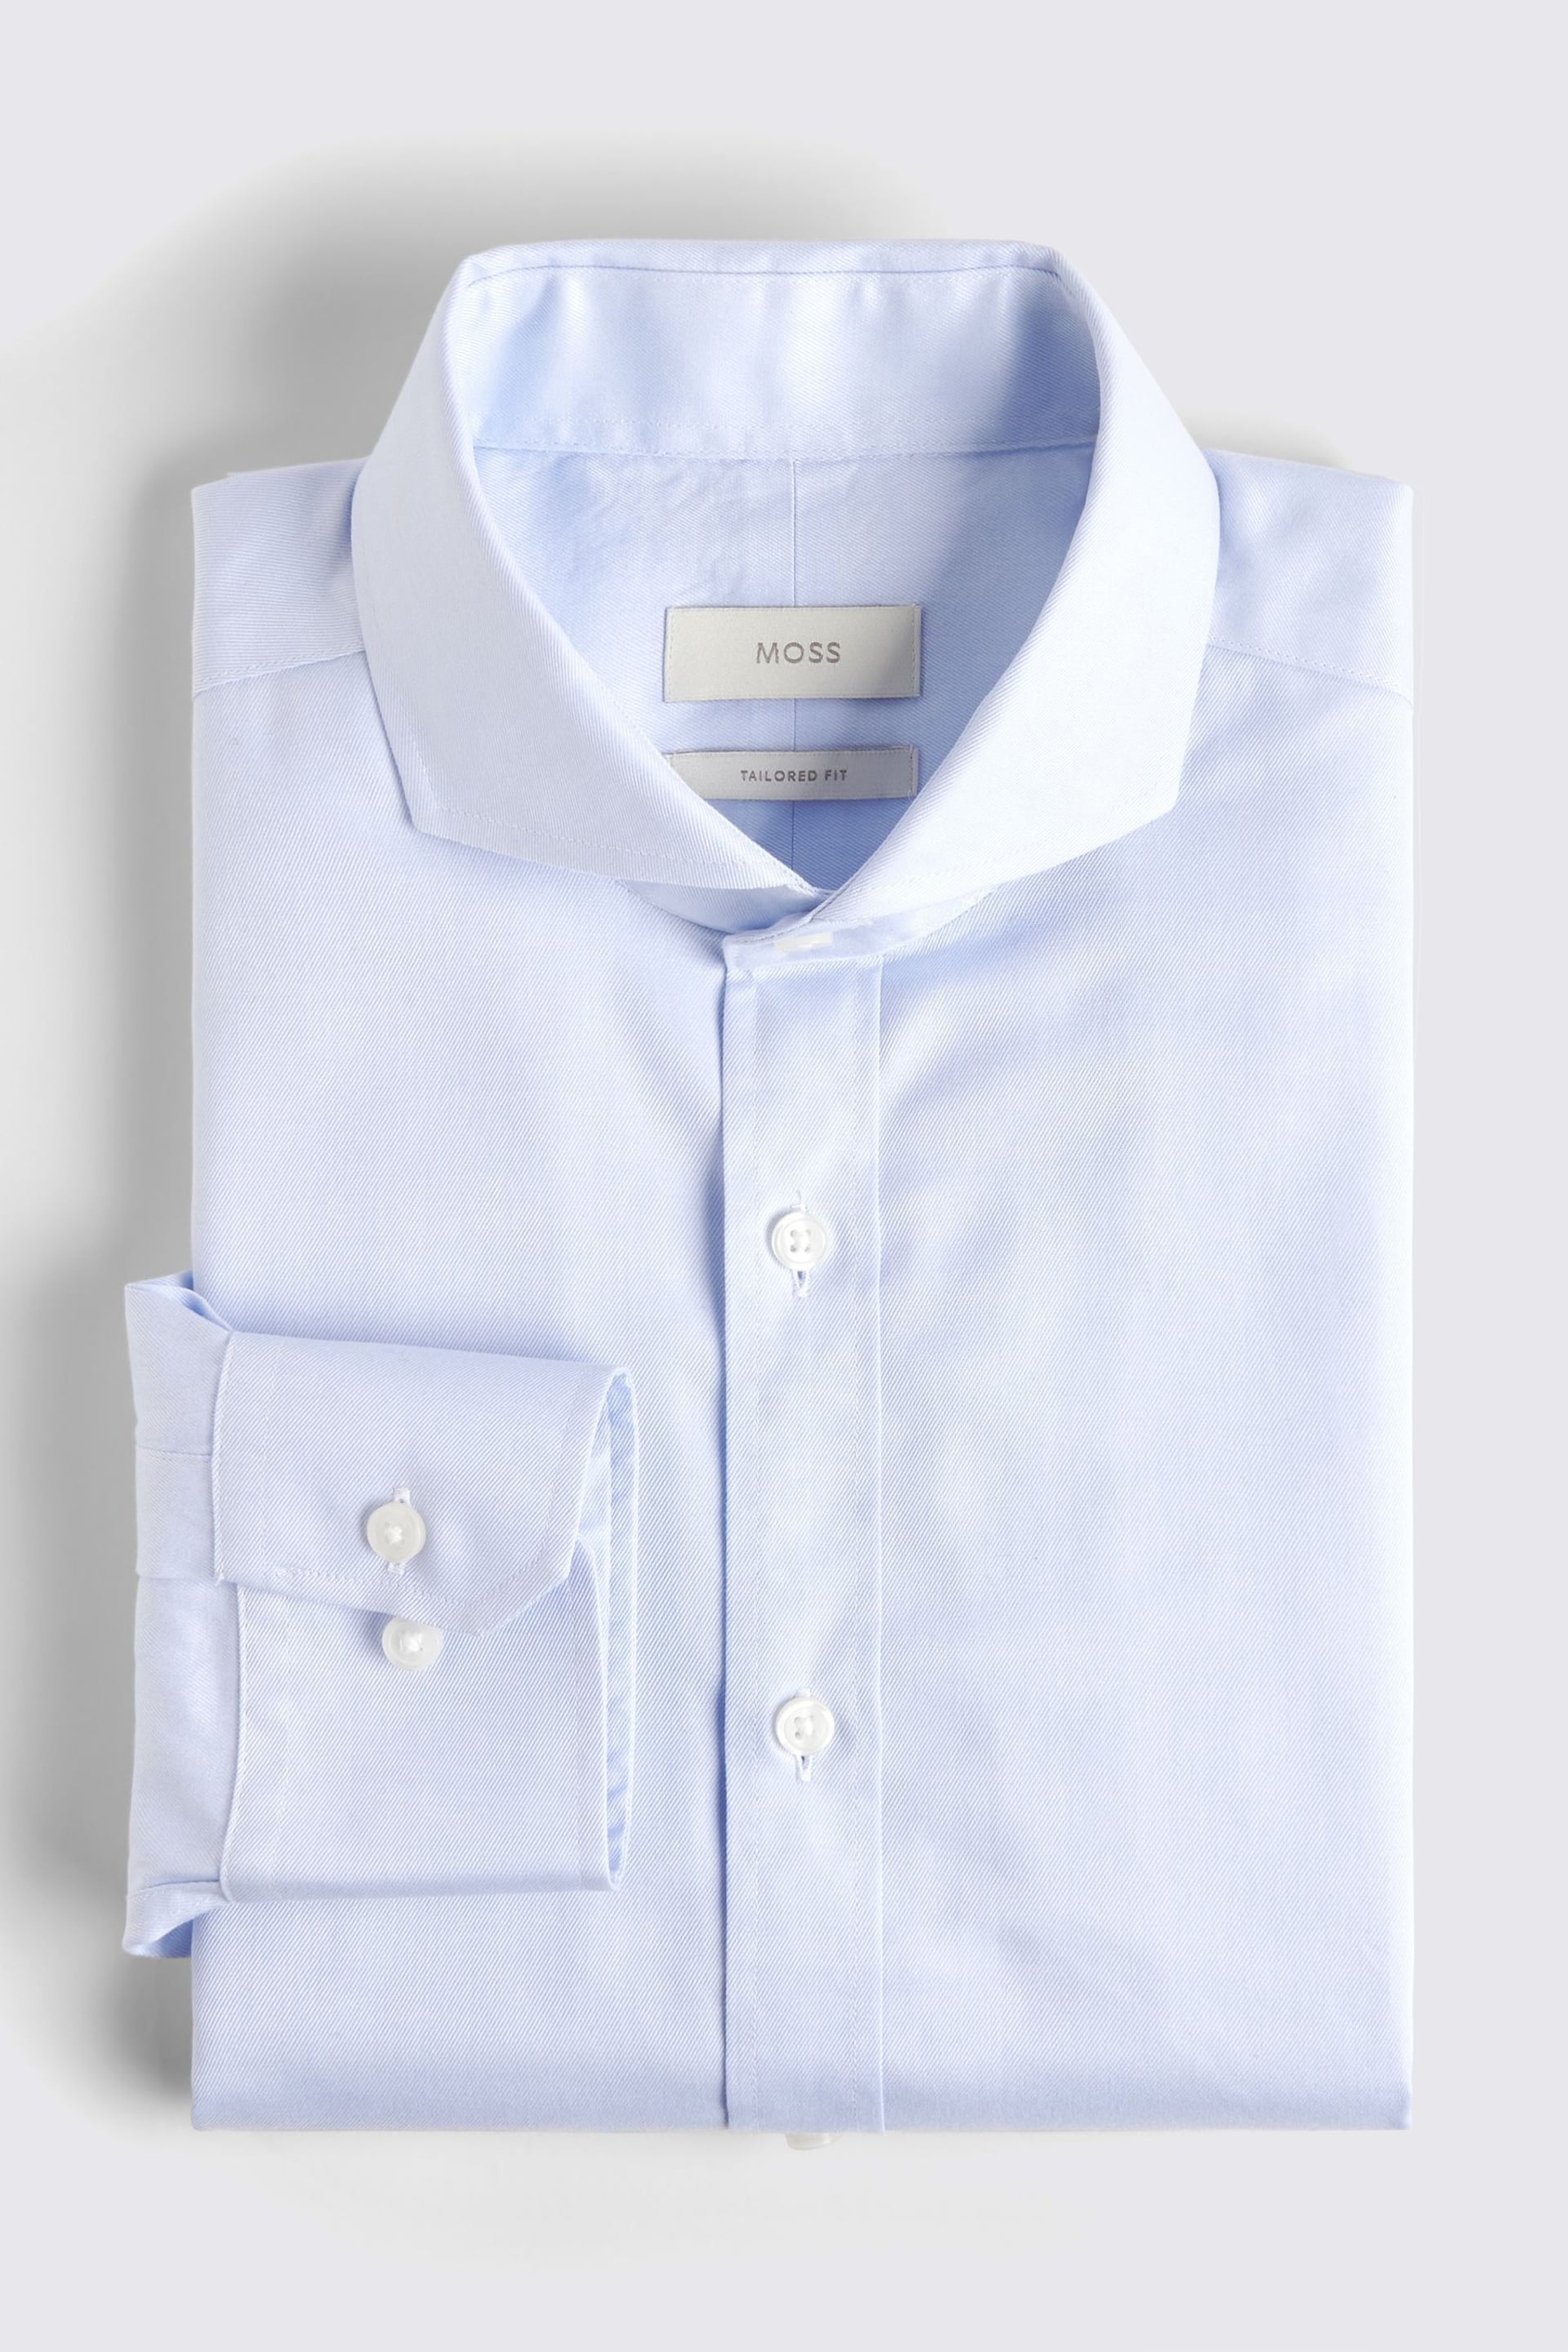 MOSS Sky Blue Tailored Fit Twill Zero Iron Shirt - Image 1 of 1